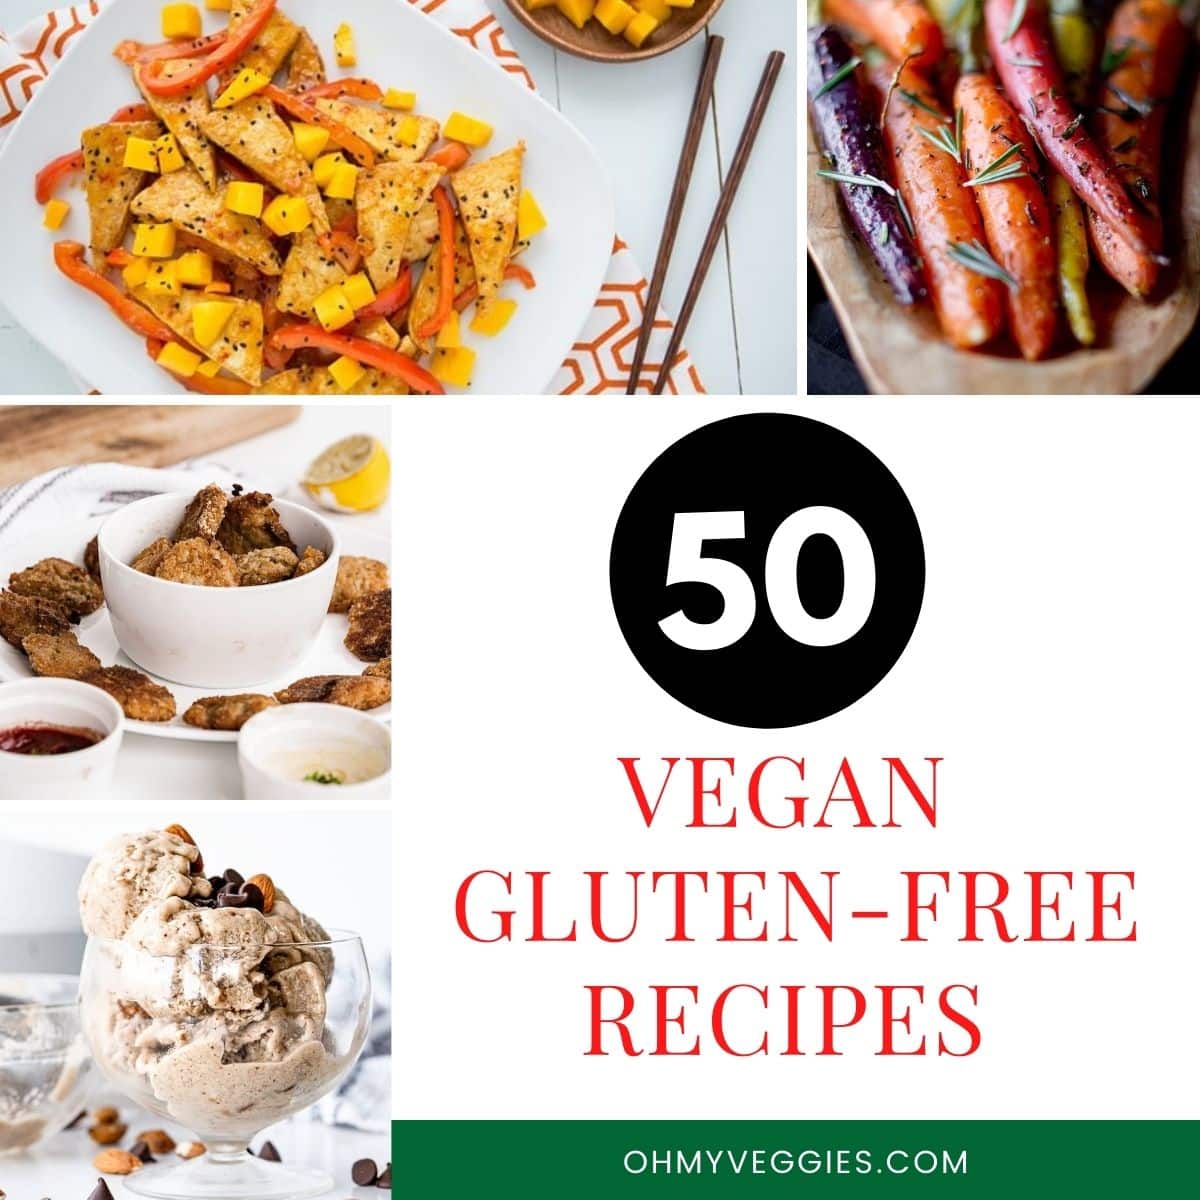 50 Vegan Gluten-Free Recipes